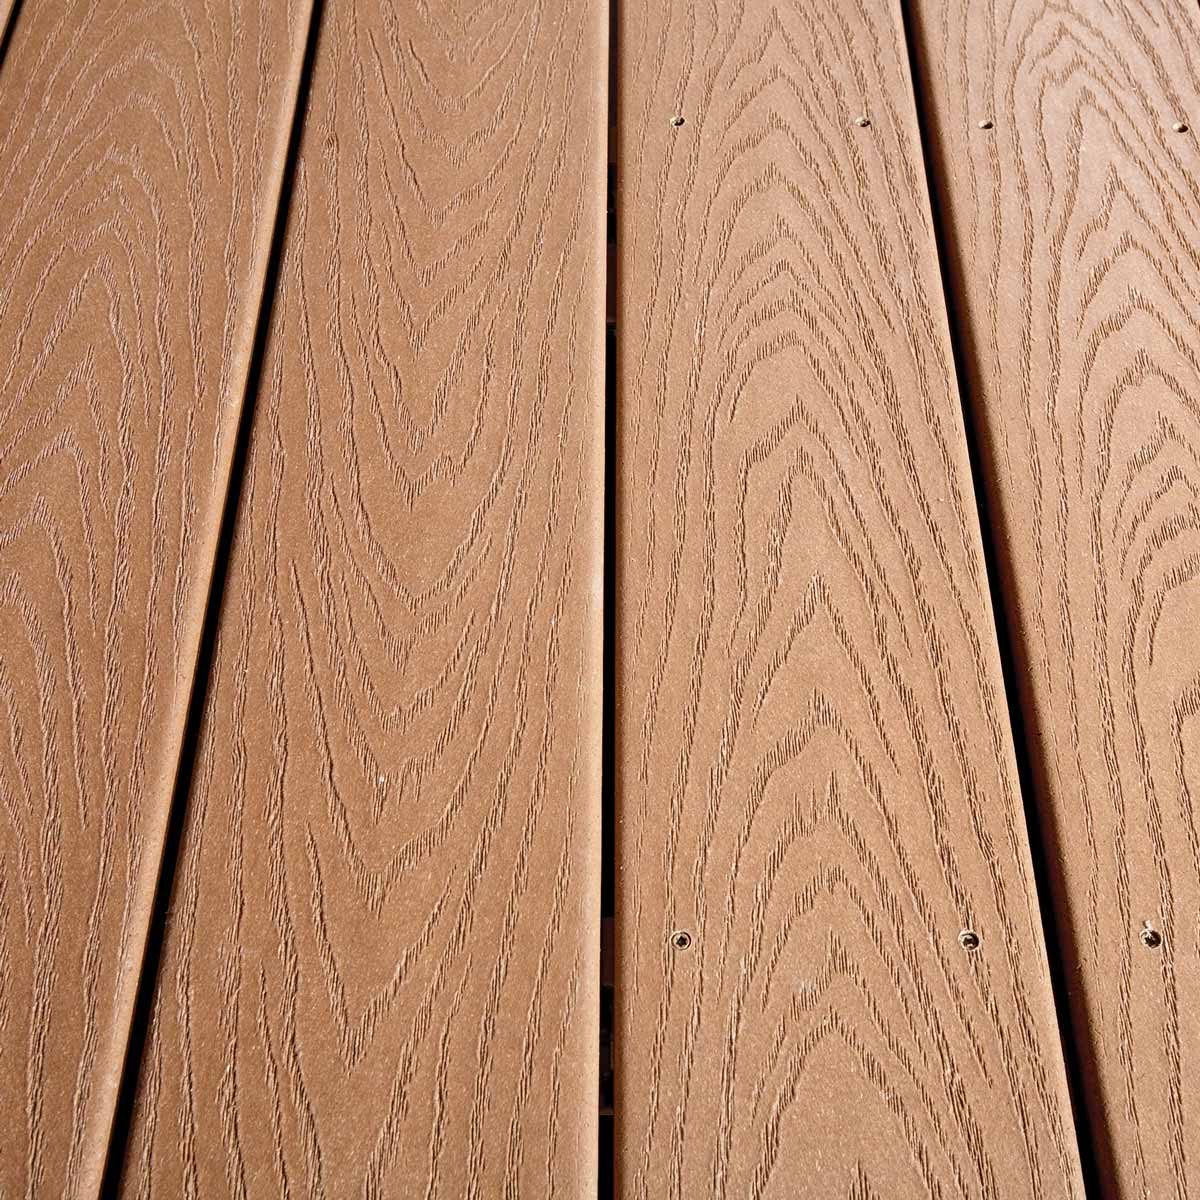 High Quality Wood Deck Texture Seamless